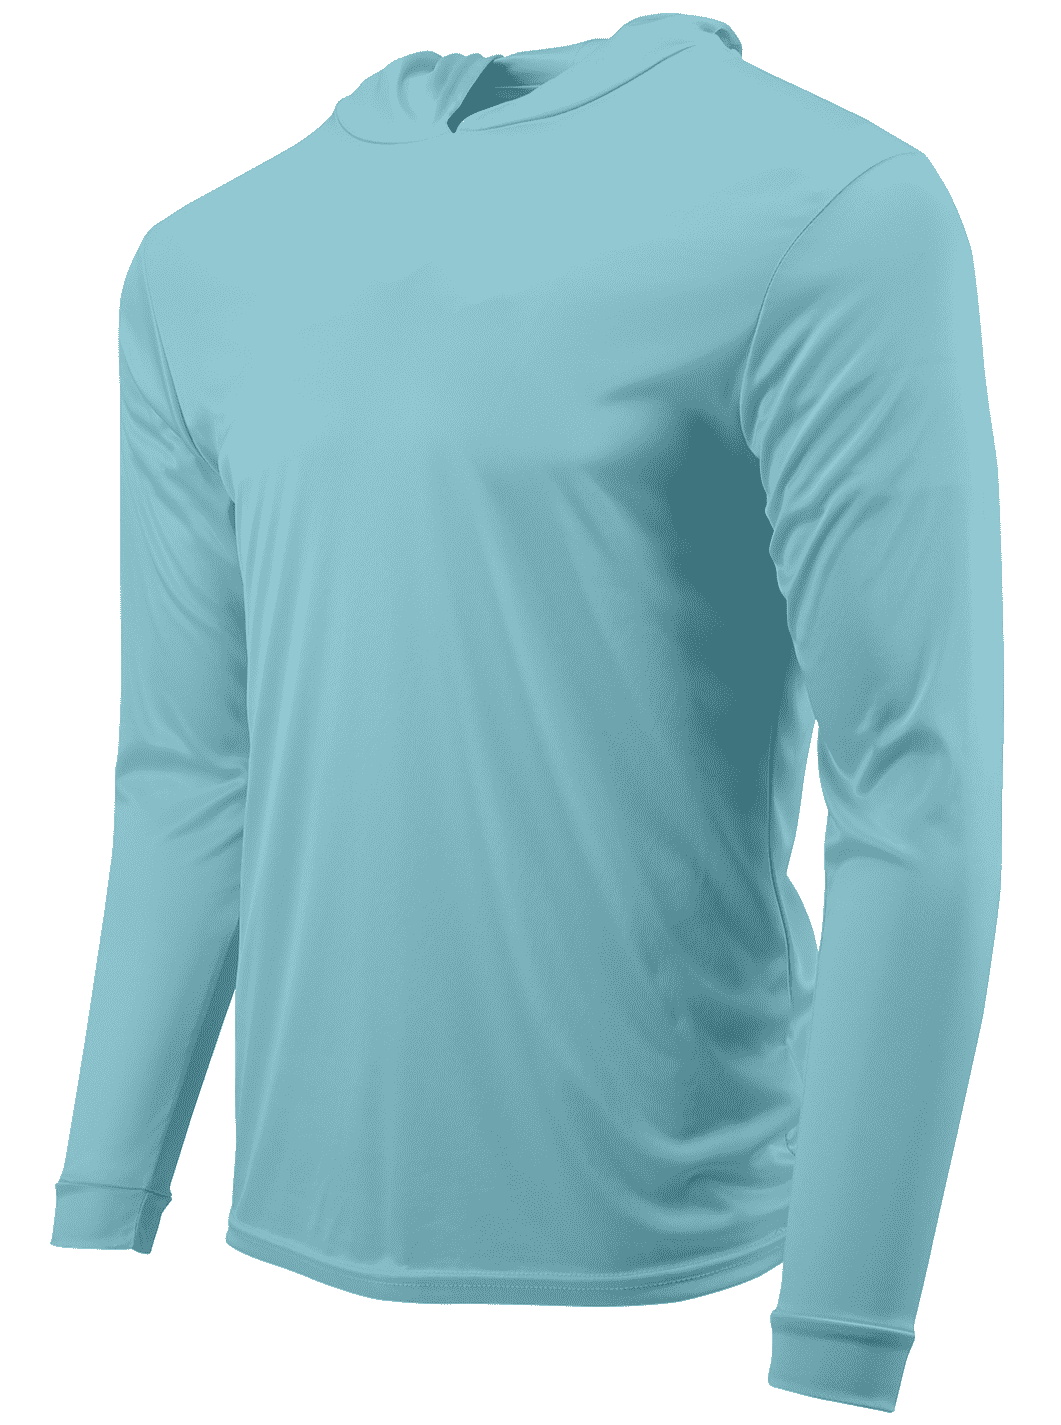 Paragon 220 Adult Long Sleeve Performance Hood - Aqua Blue - HIT a Double - 1